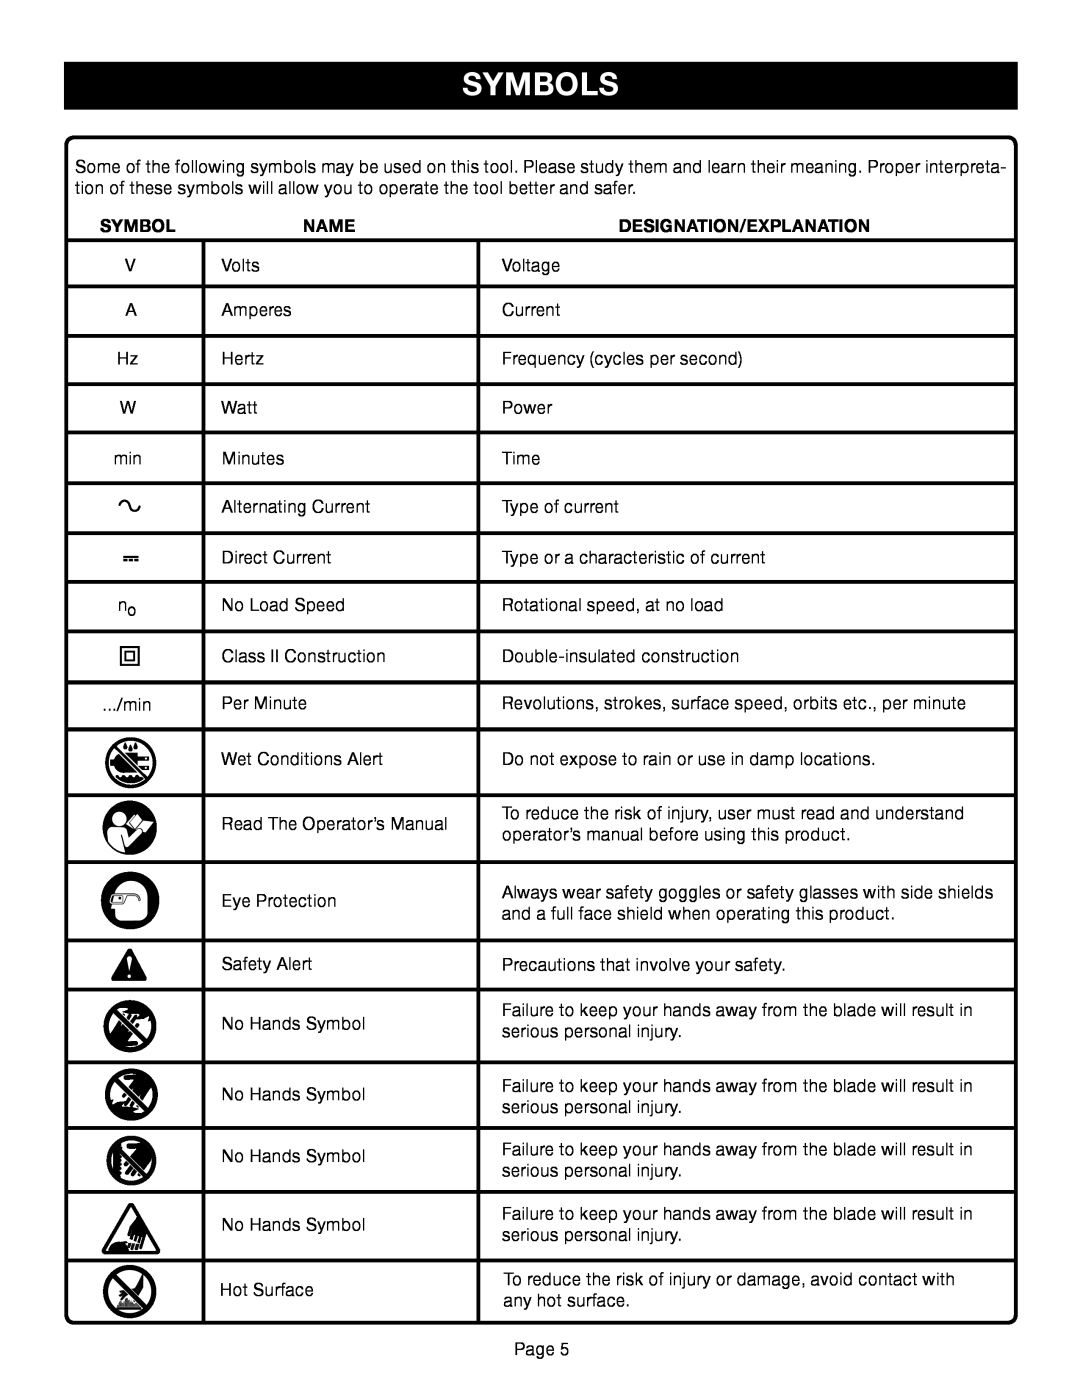 Ryobi BS1001SV manual Symbols, Name, Designation/Explanation 